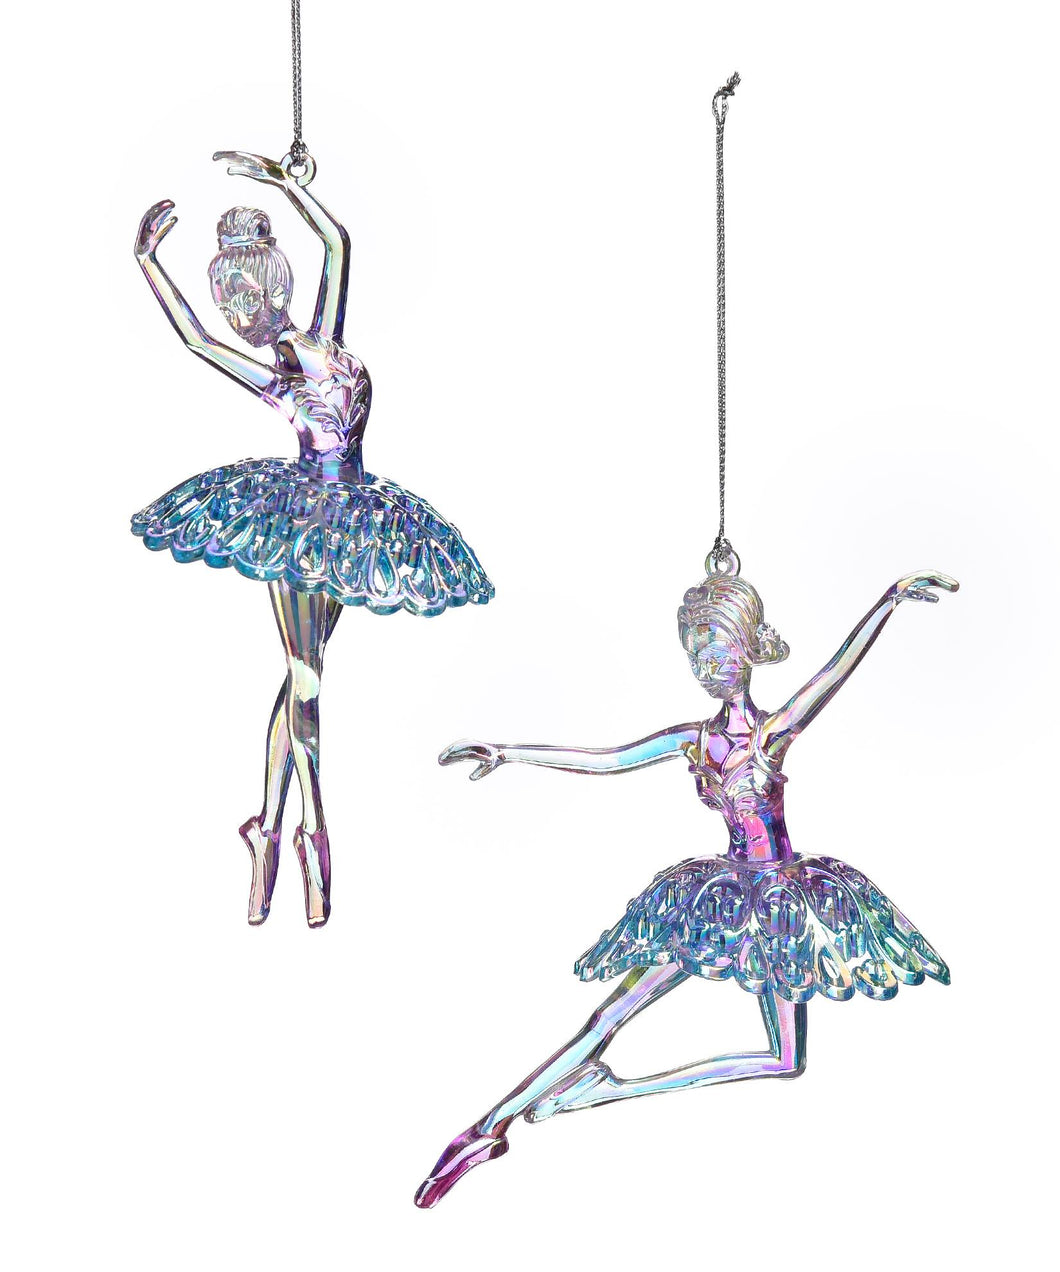 Ballerina Bravura Ornament- Lunging pose